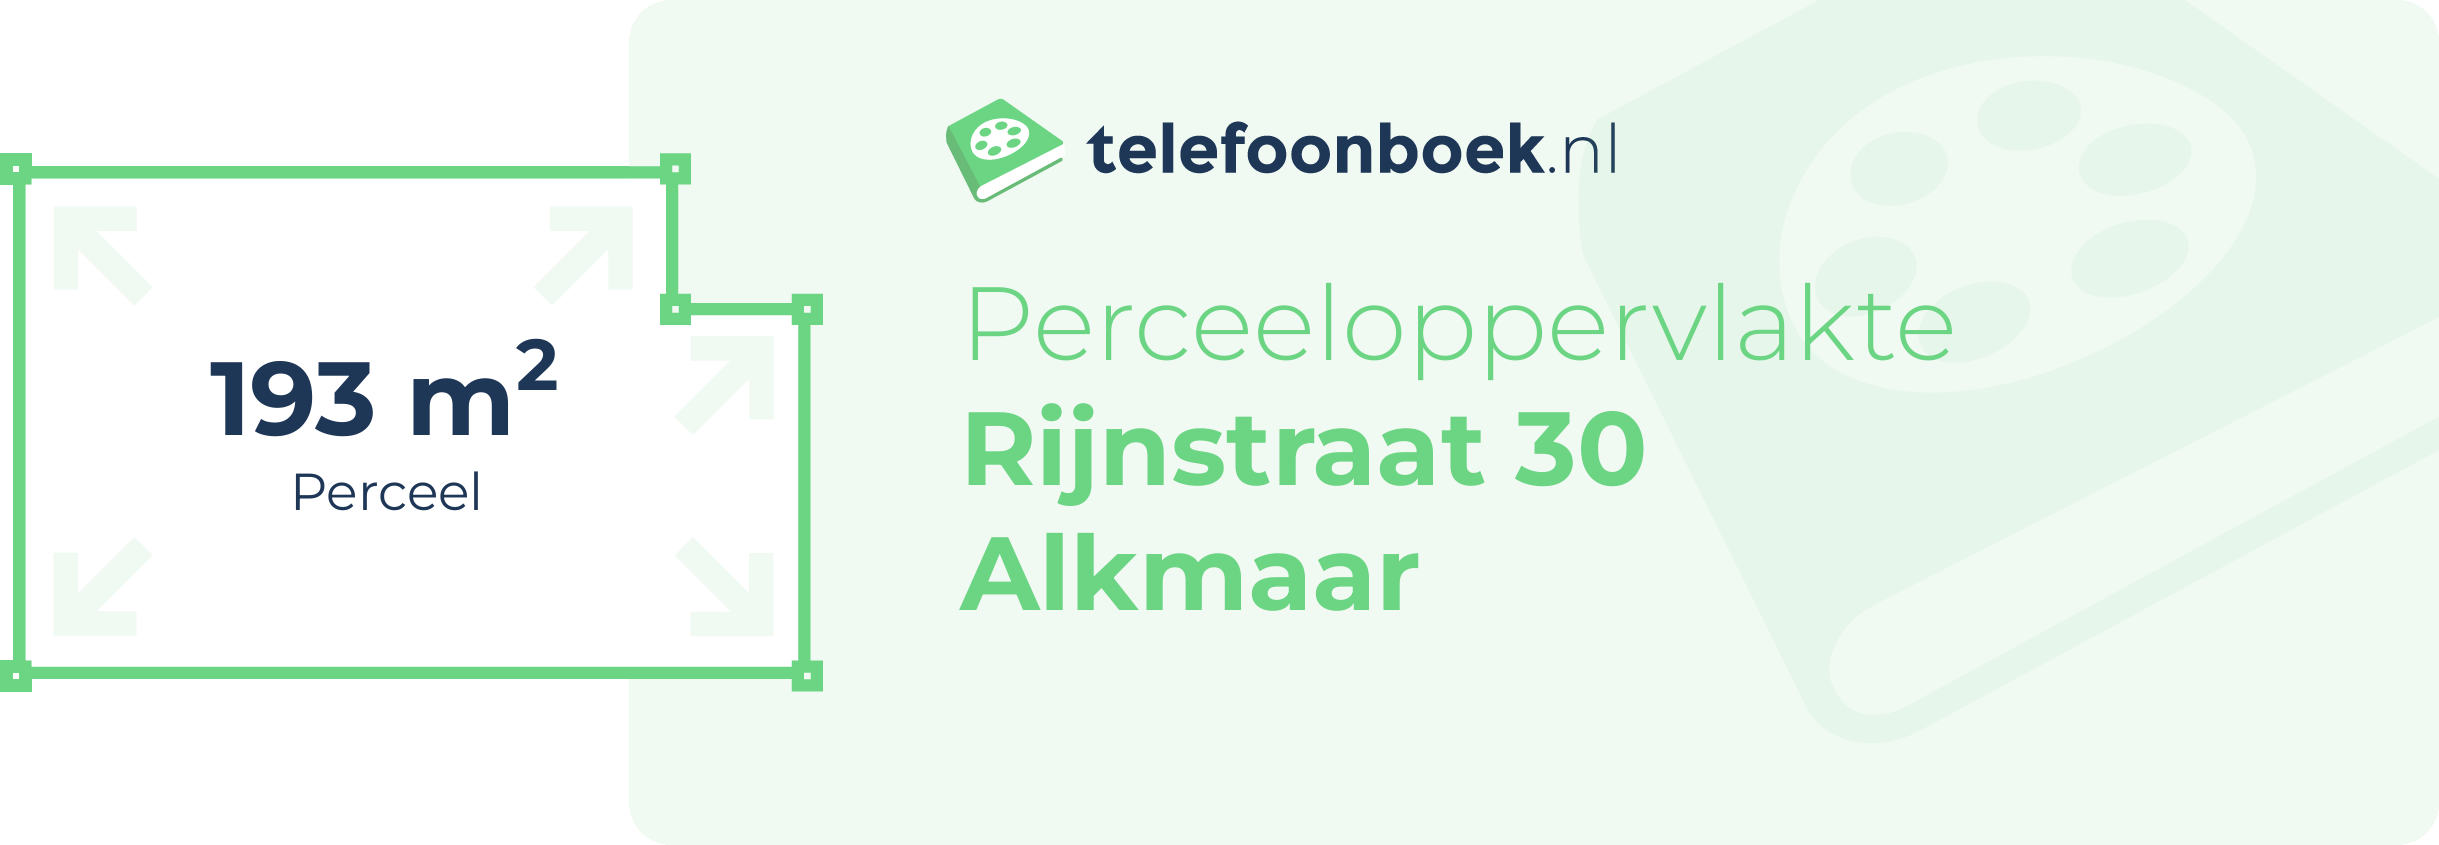 Perceeloppervlakte Rijnstraat 30 Alkmaar